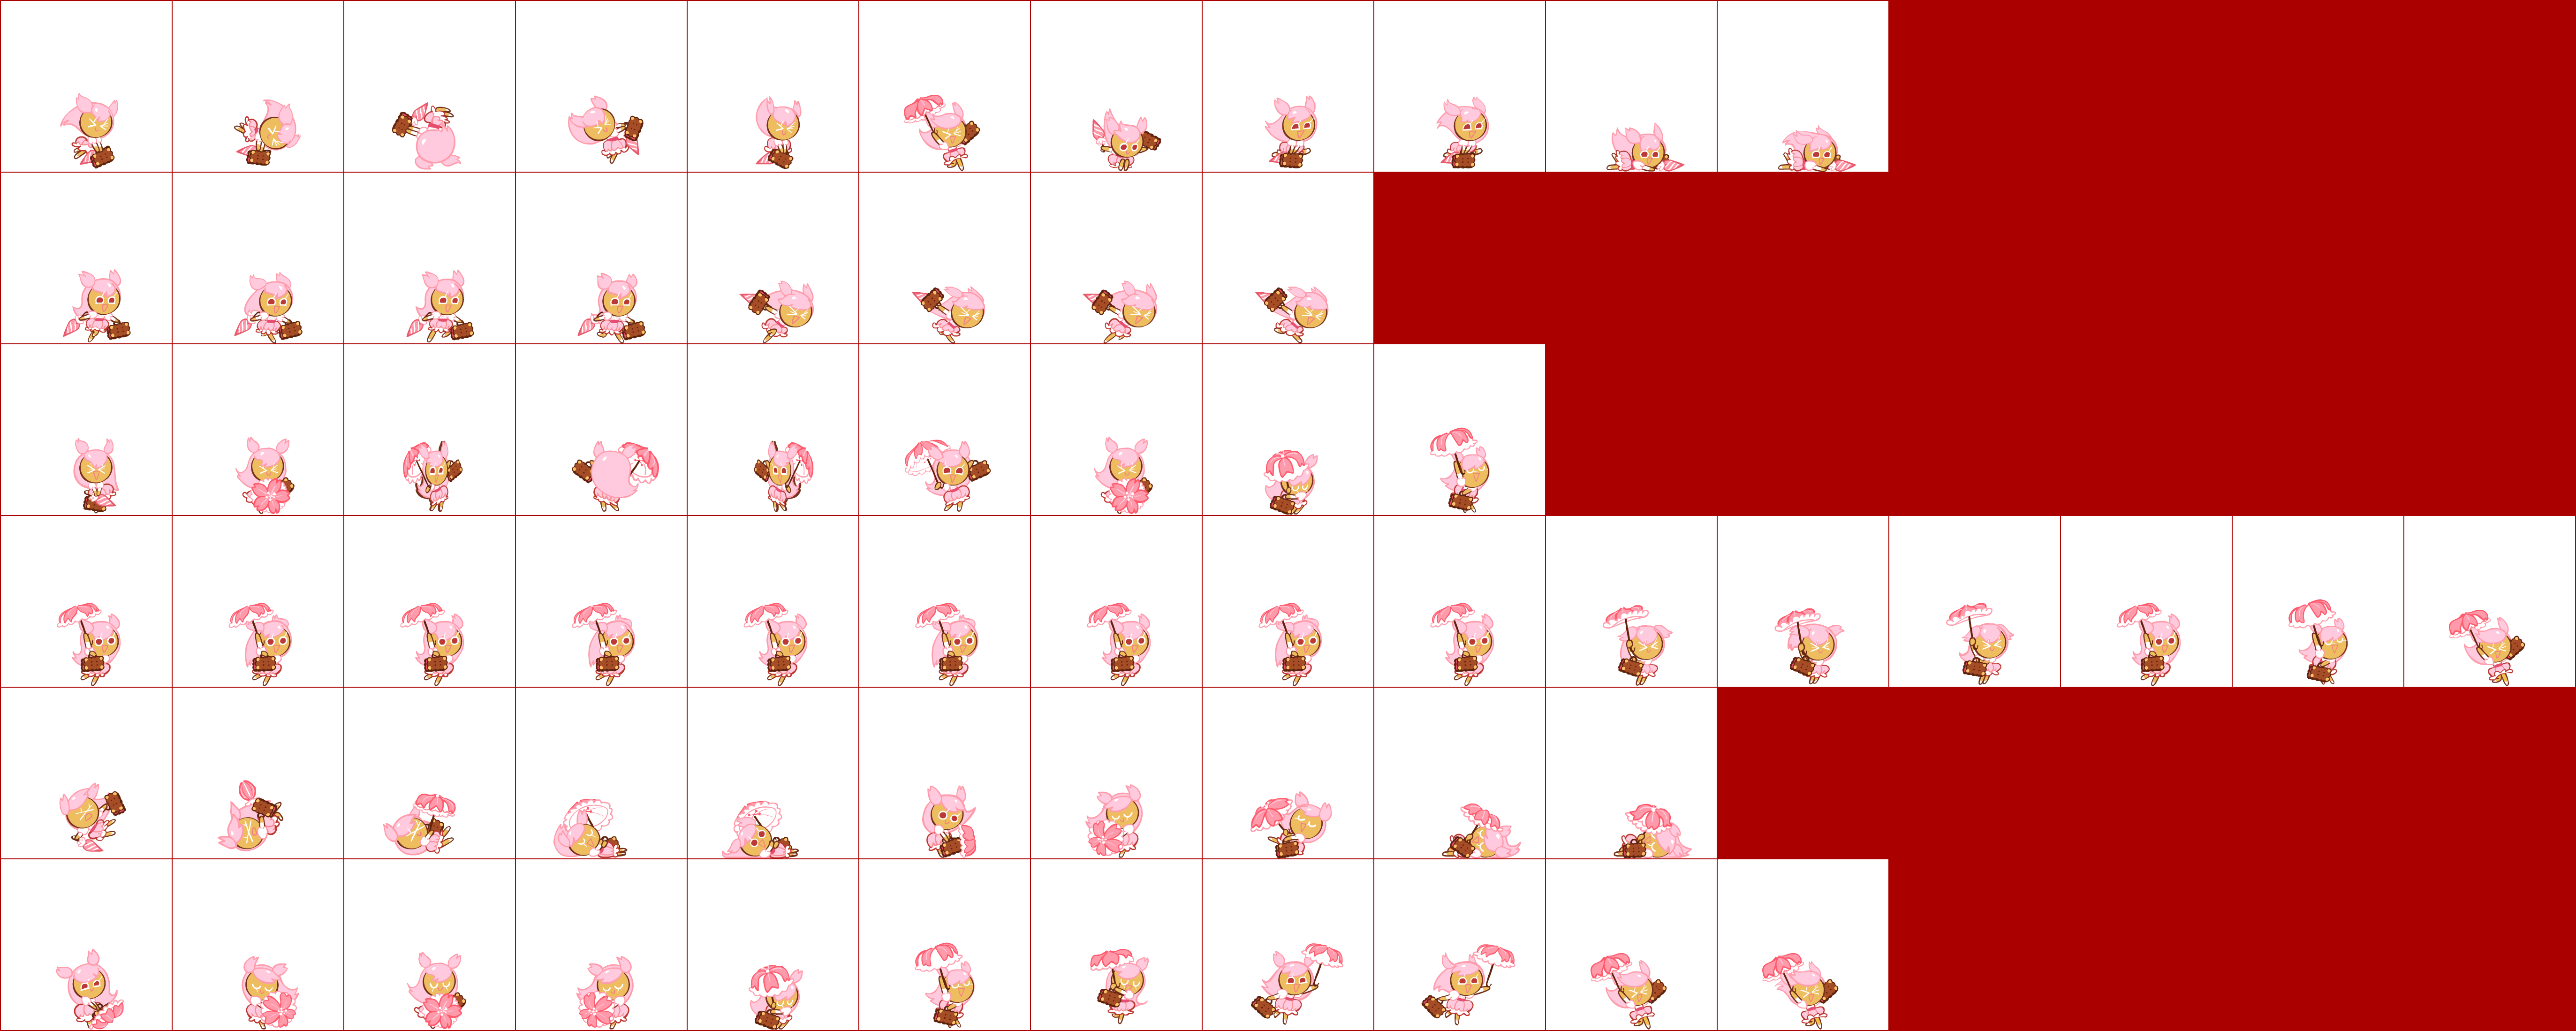 Cookie Run - Cherry Blossom Cookie